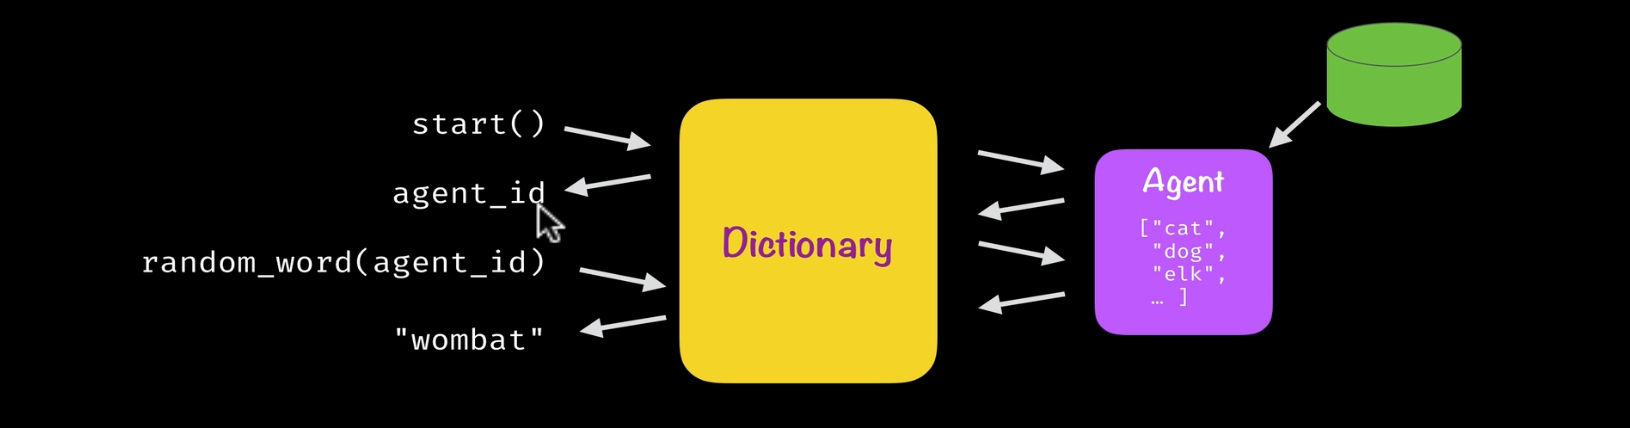 Dictionary architecture diagram 3